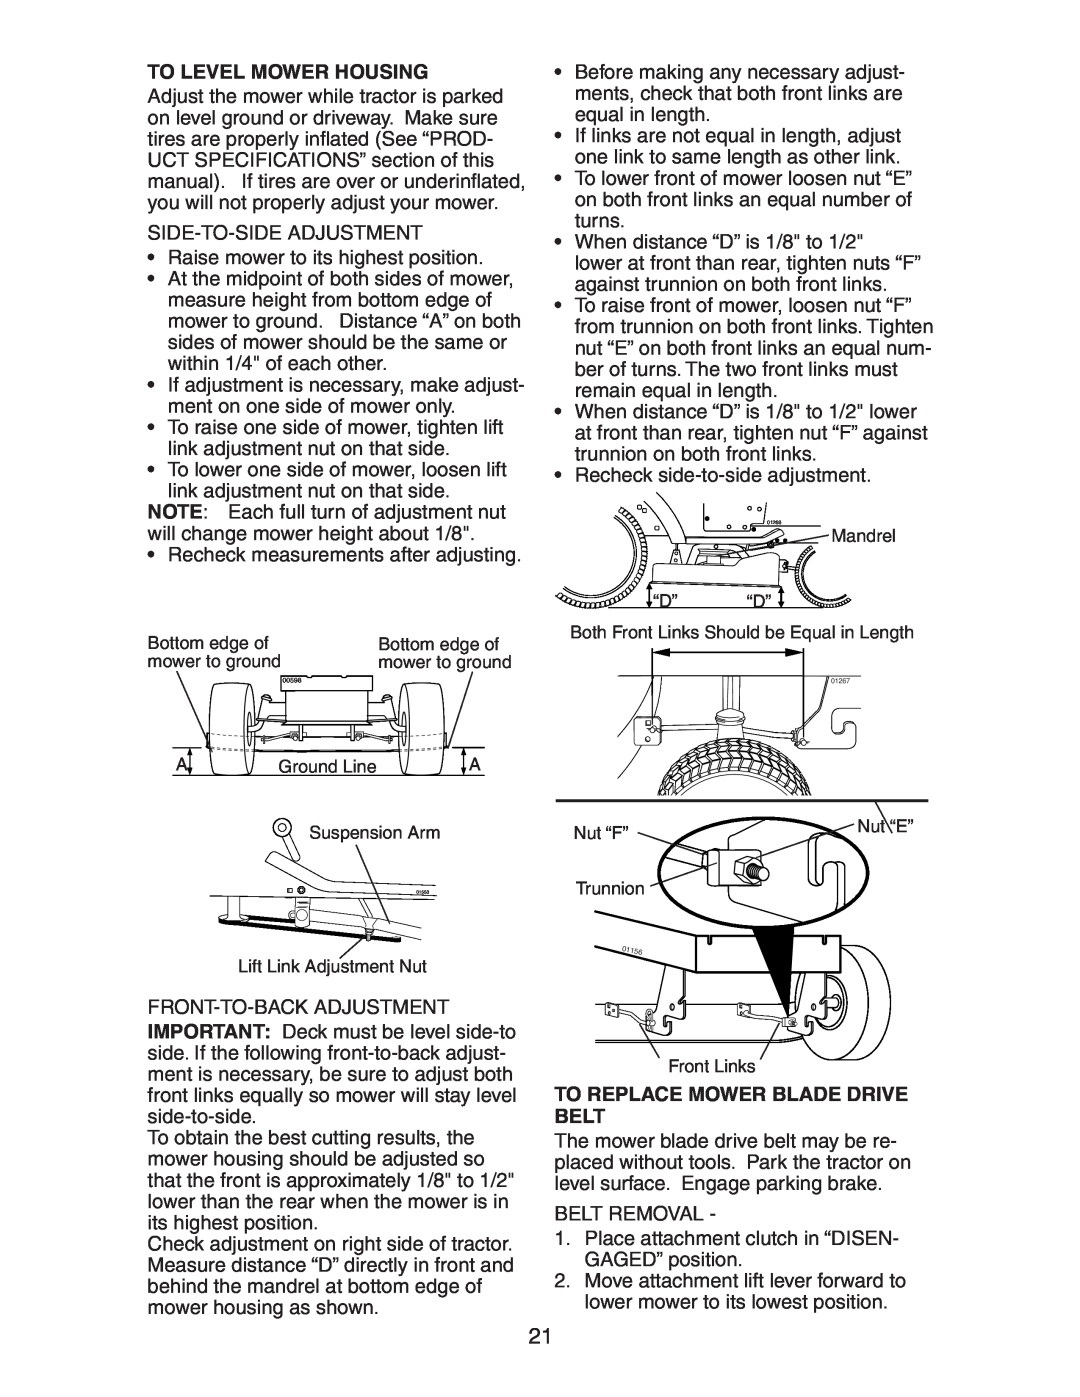 Poulan 271491 manual To Level Mower Housing, To Replace Mower Blade Drive Belt 